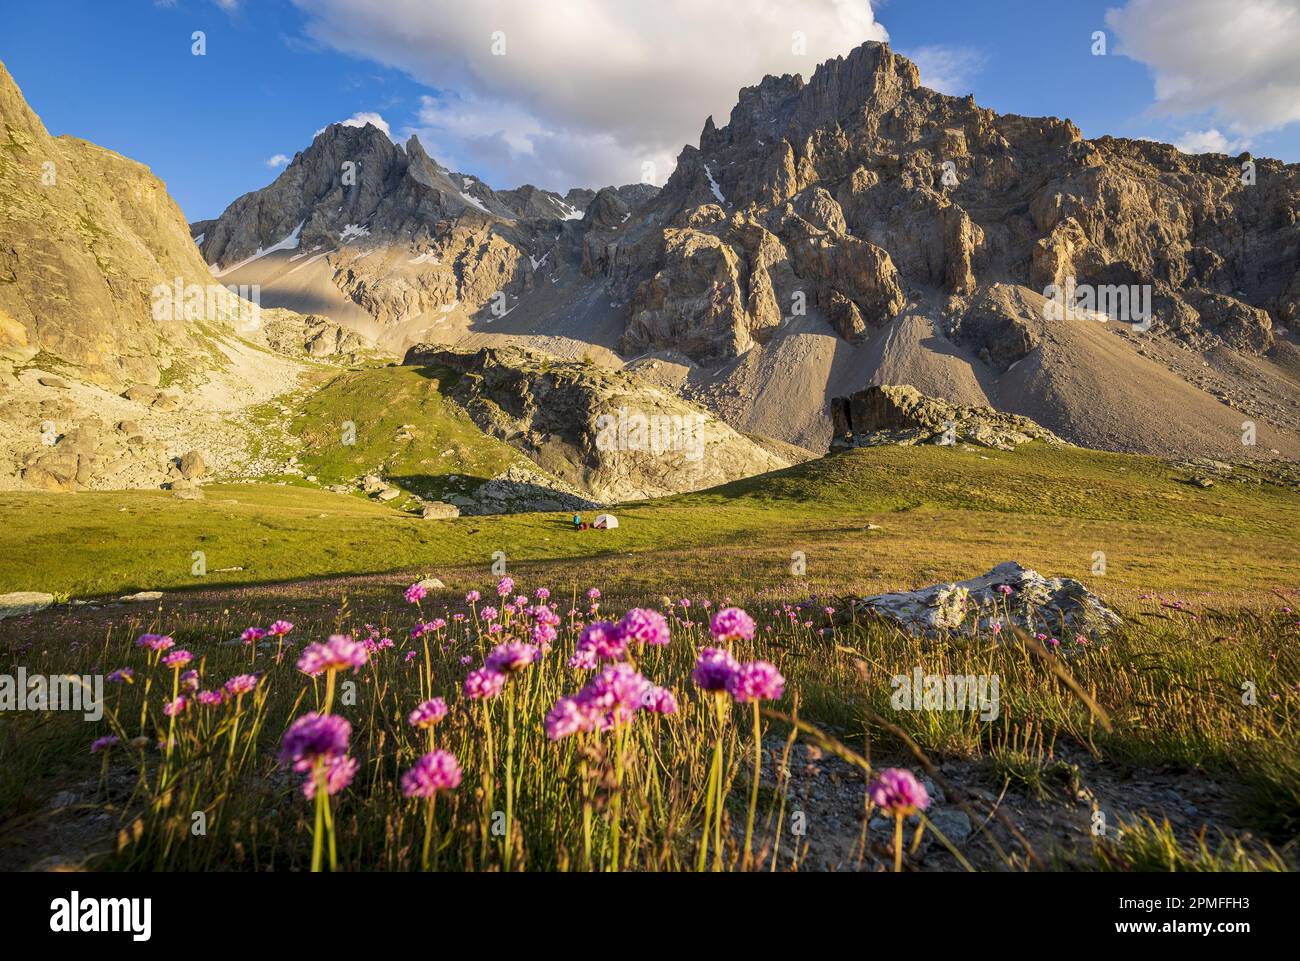 France, Alpes-de-Haute-Provence, Saint-Paul-sur-Ubaye, bivouac near Lake Chillol (2463 m), meadow with flowers of Alpine Thrift (Armeria alpina), Aiguille de Chillol (3316 m) on the left and Aiguille Grande (3064 m) on right in the background Stock Photo